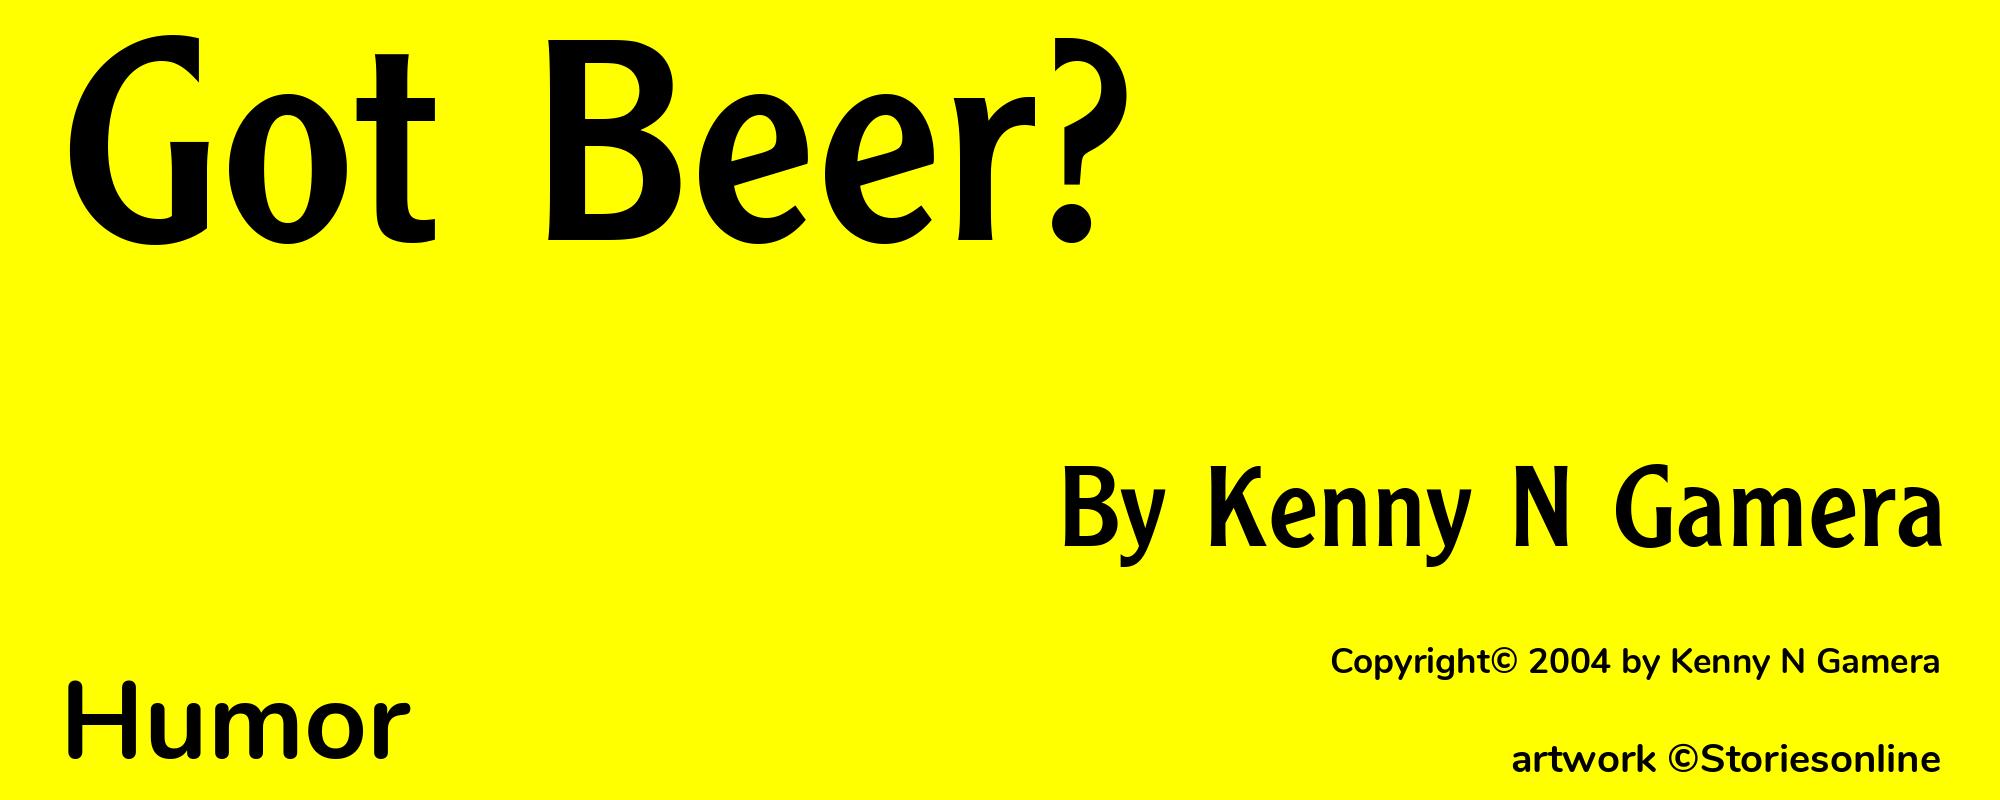 Got Beer? - Cover